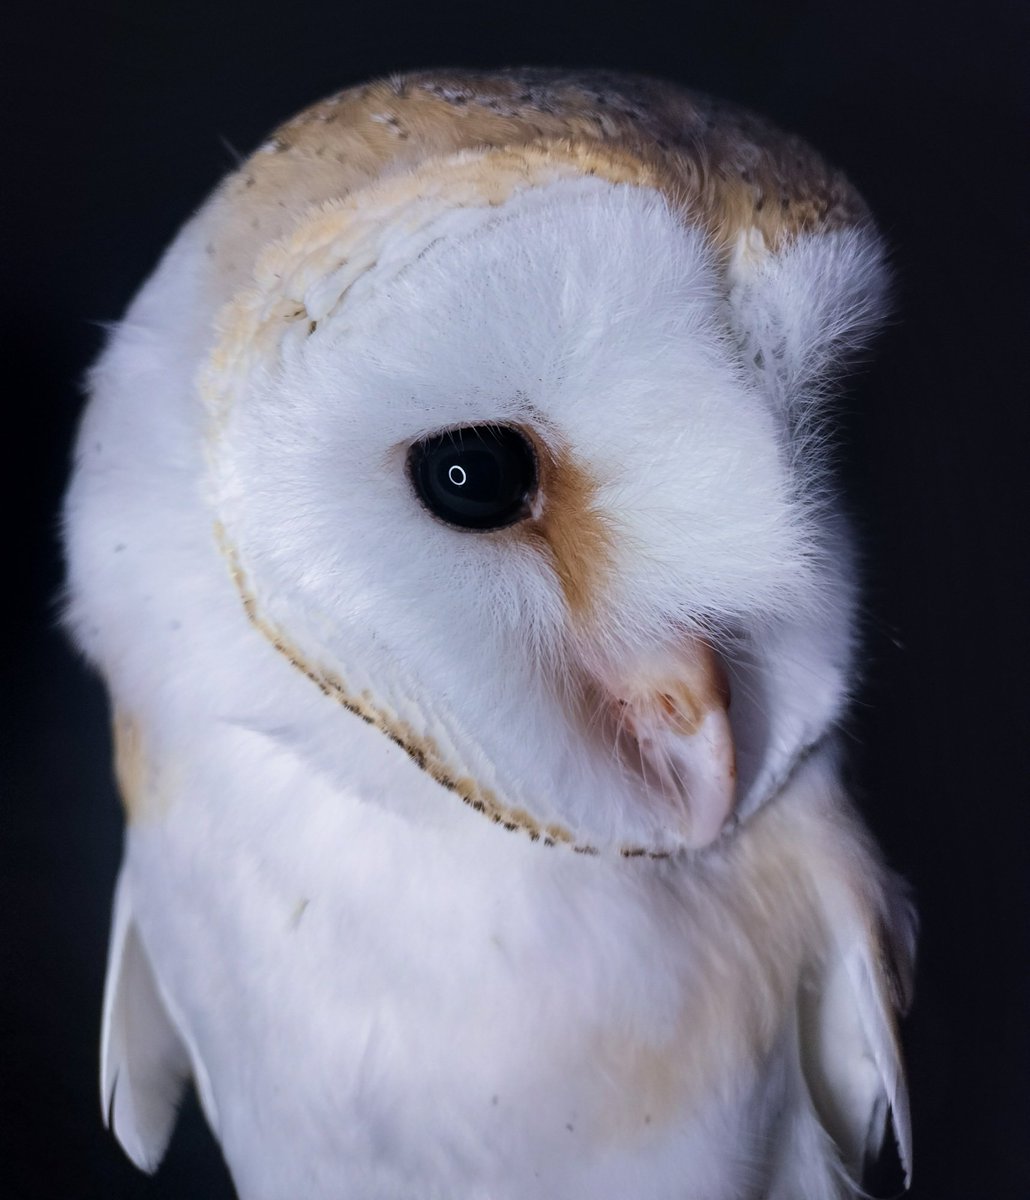 Queen of the night ~ Isn't she sooo beautiful 🦉
Barn Owl ~ Tyto Alba (f)
#barnowl #tytoalba #owls #beautiful #iloveowls #birdconservation #owl #savenature #owlproject 
@BarnOwlTrust